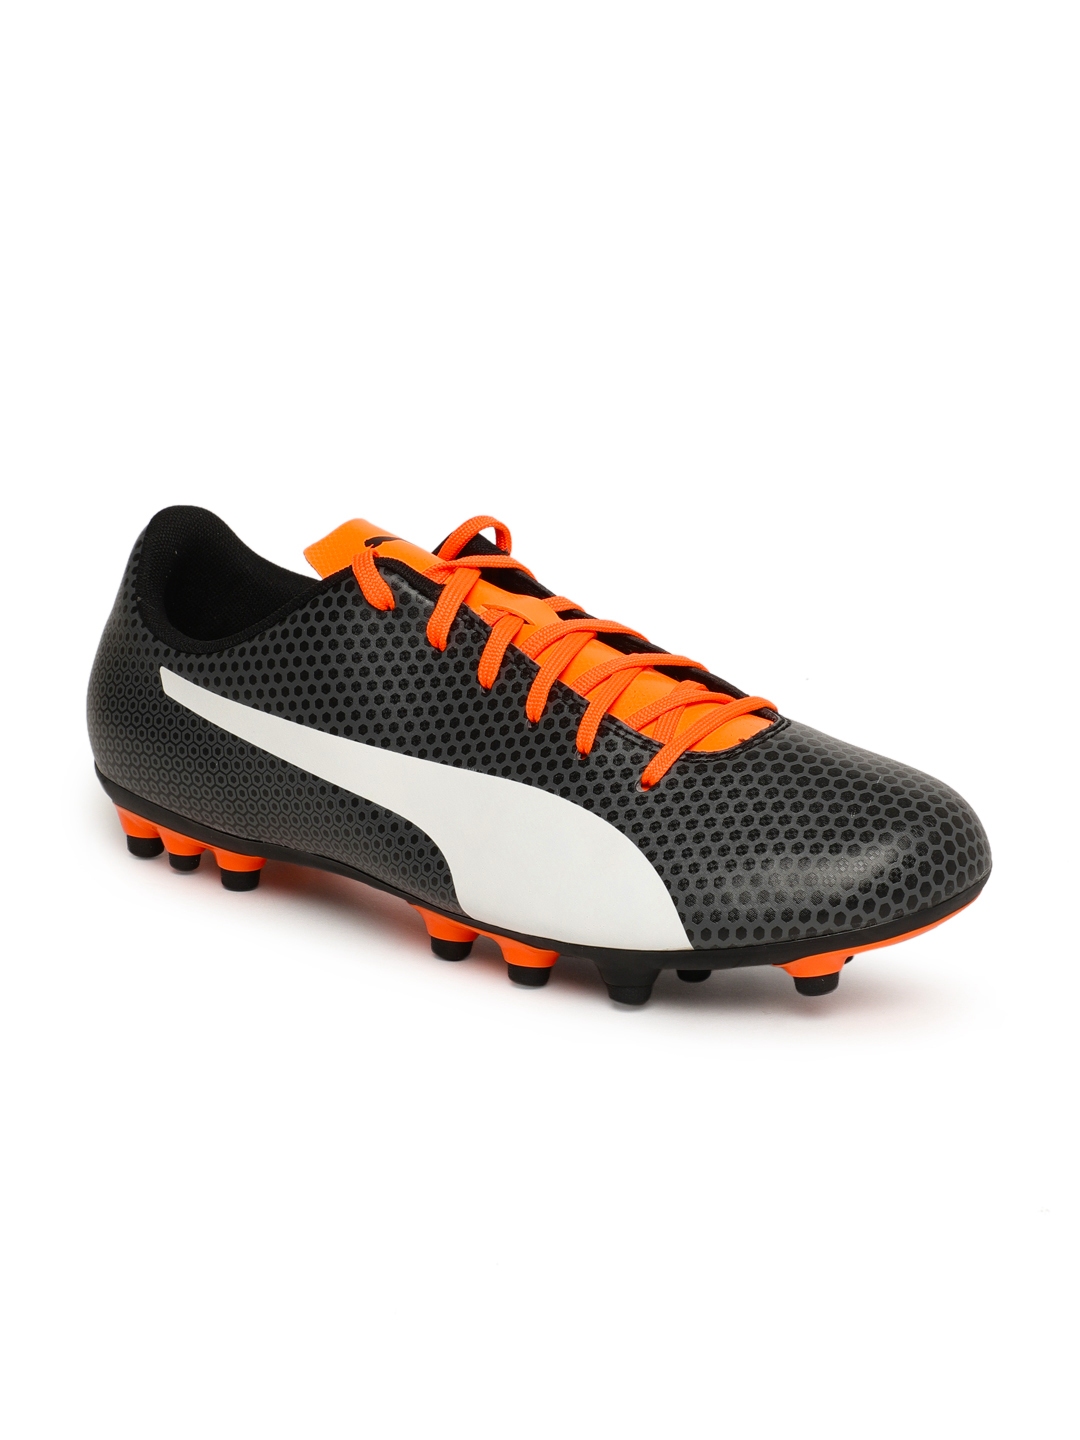 Buy Puma Men Black Orange Puma Spirit Ag Football Shoes Sports